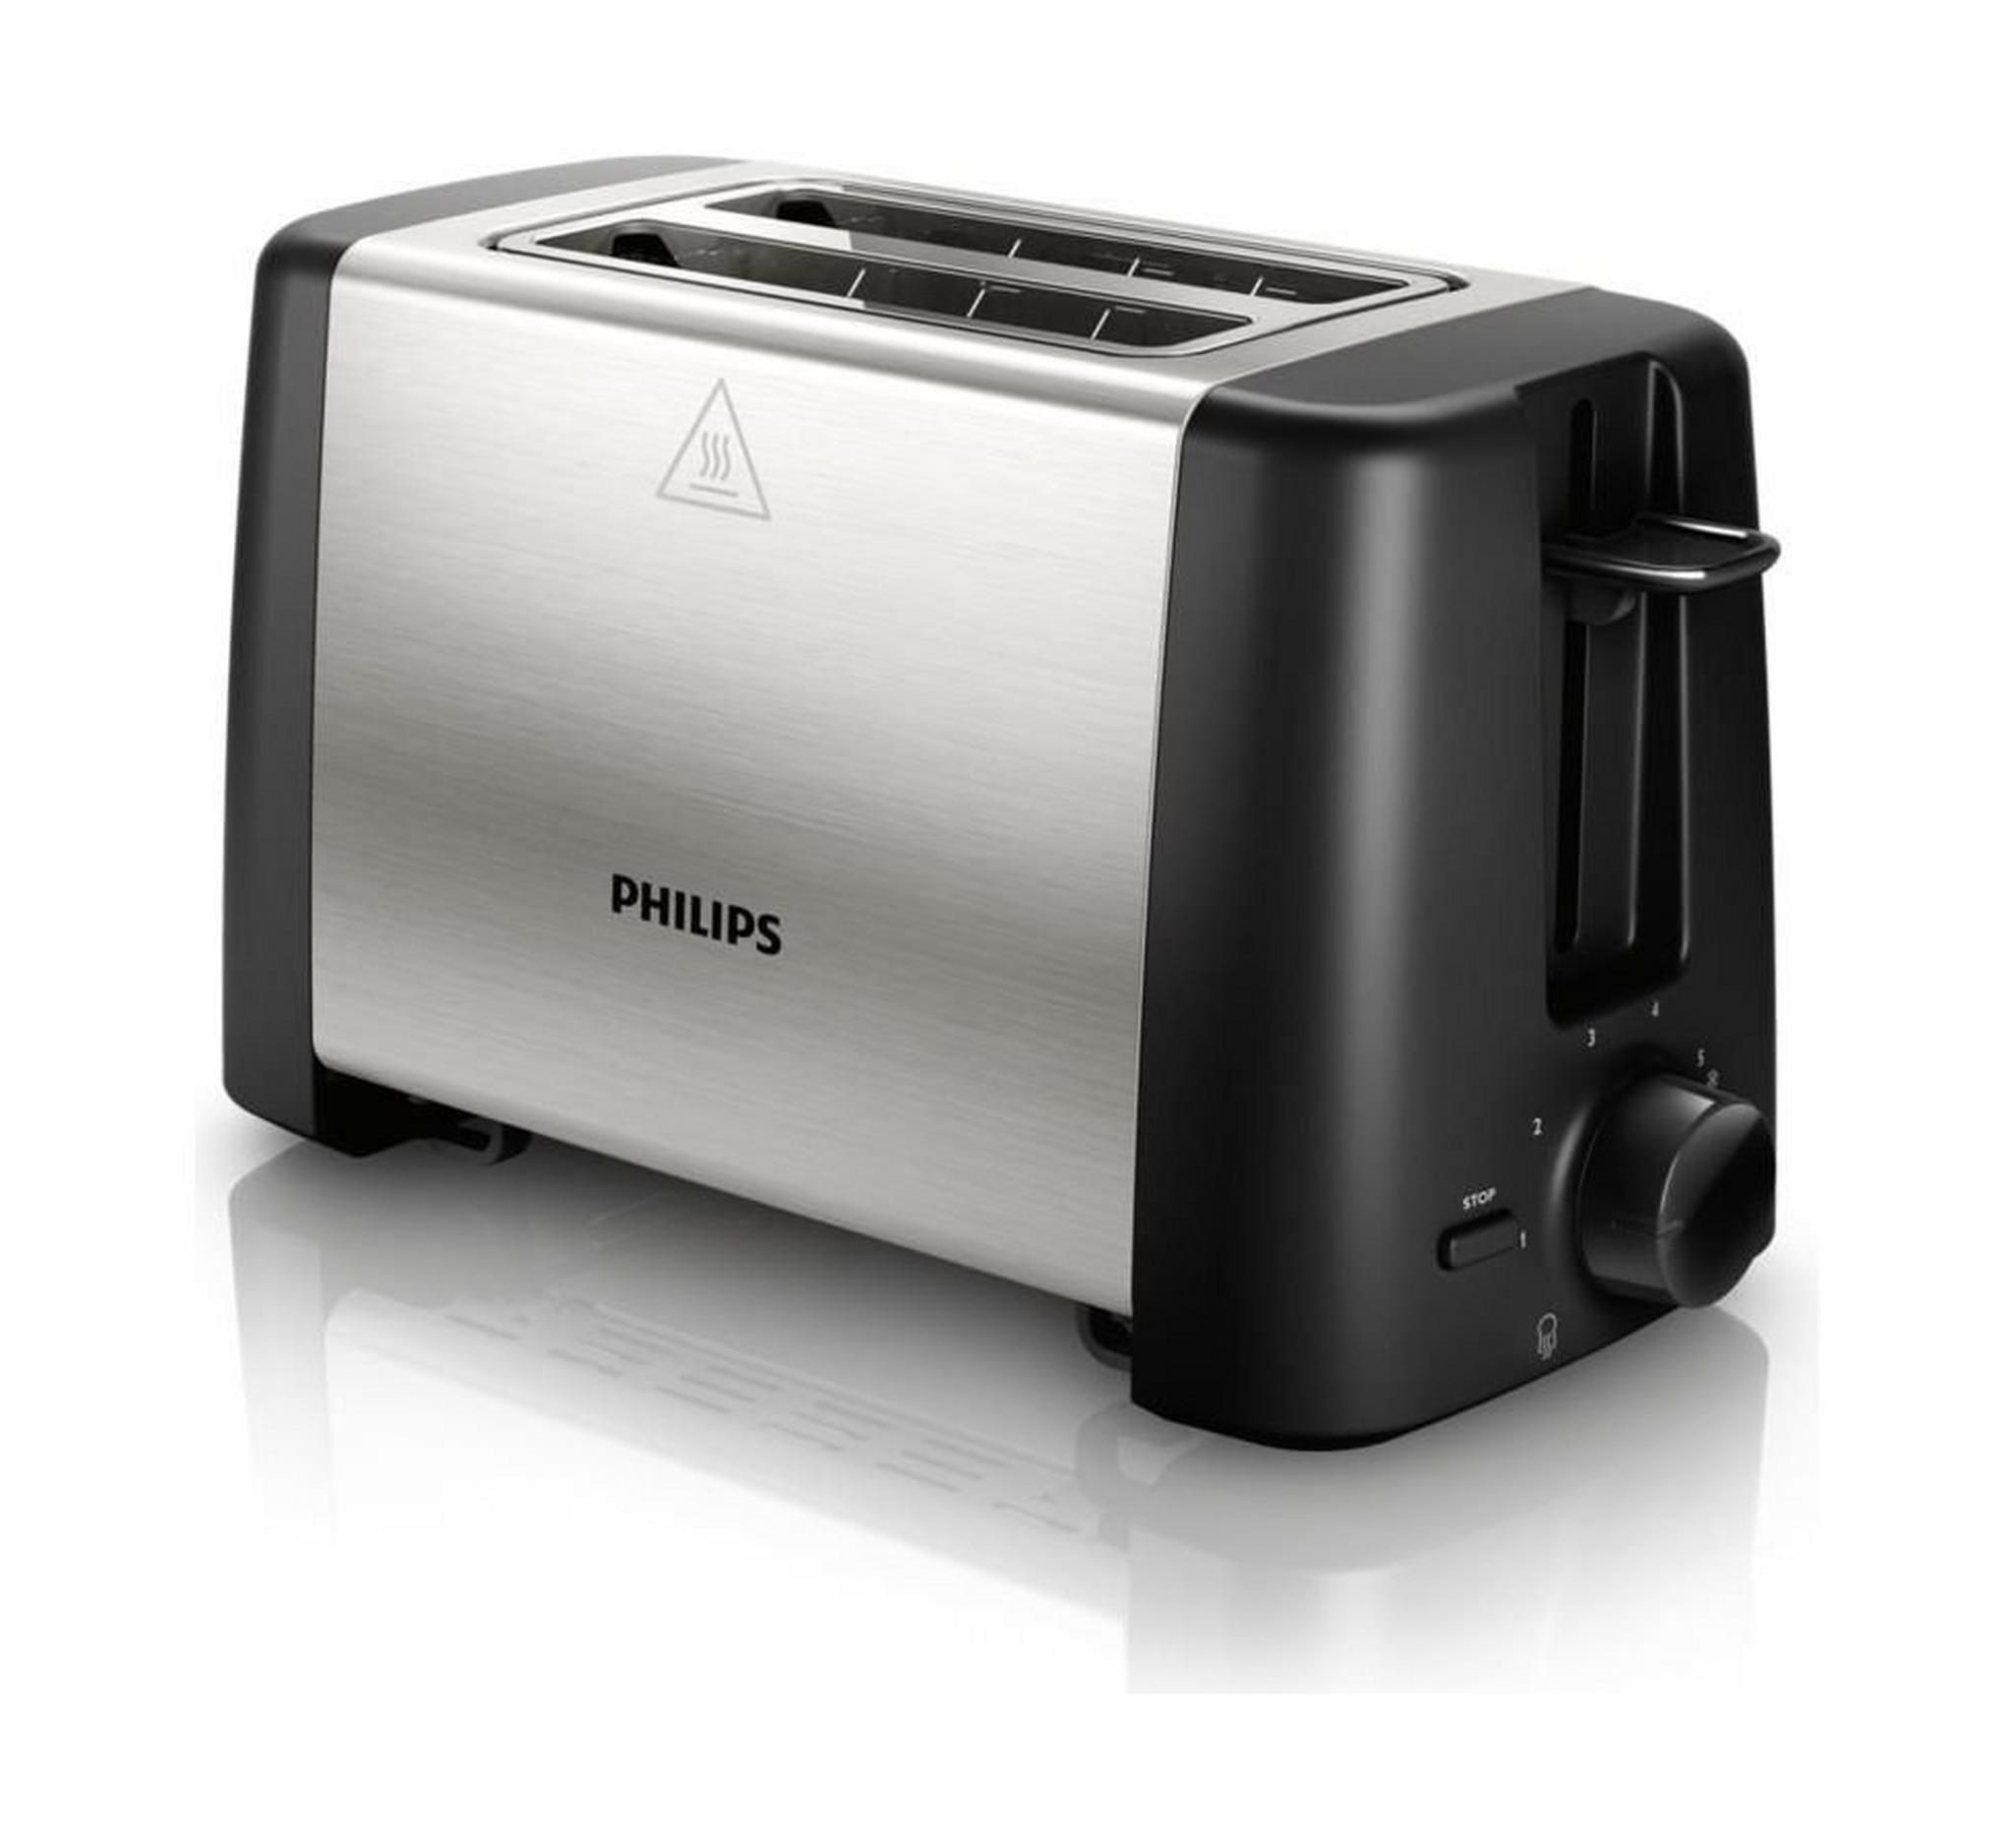 Philips 2-Slot Bread Toaster (HD4825/91) - Black